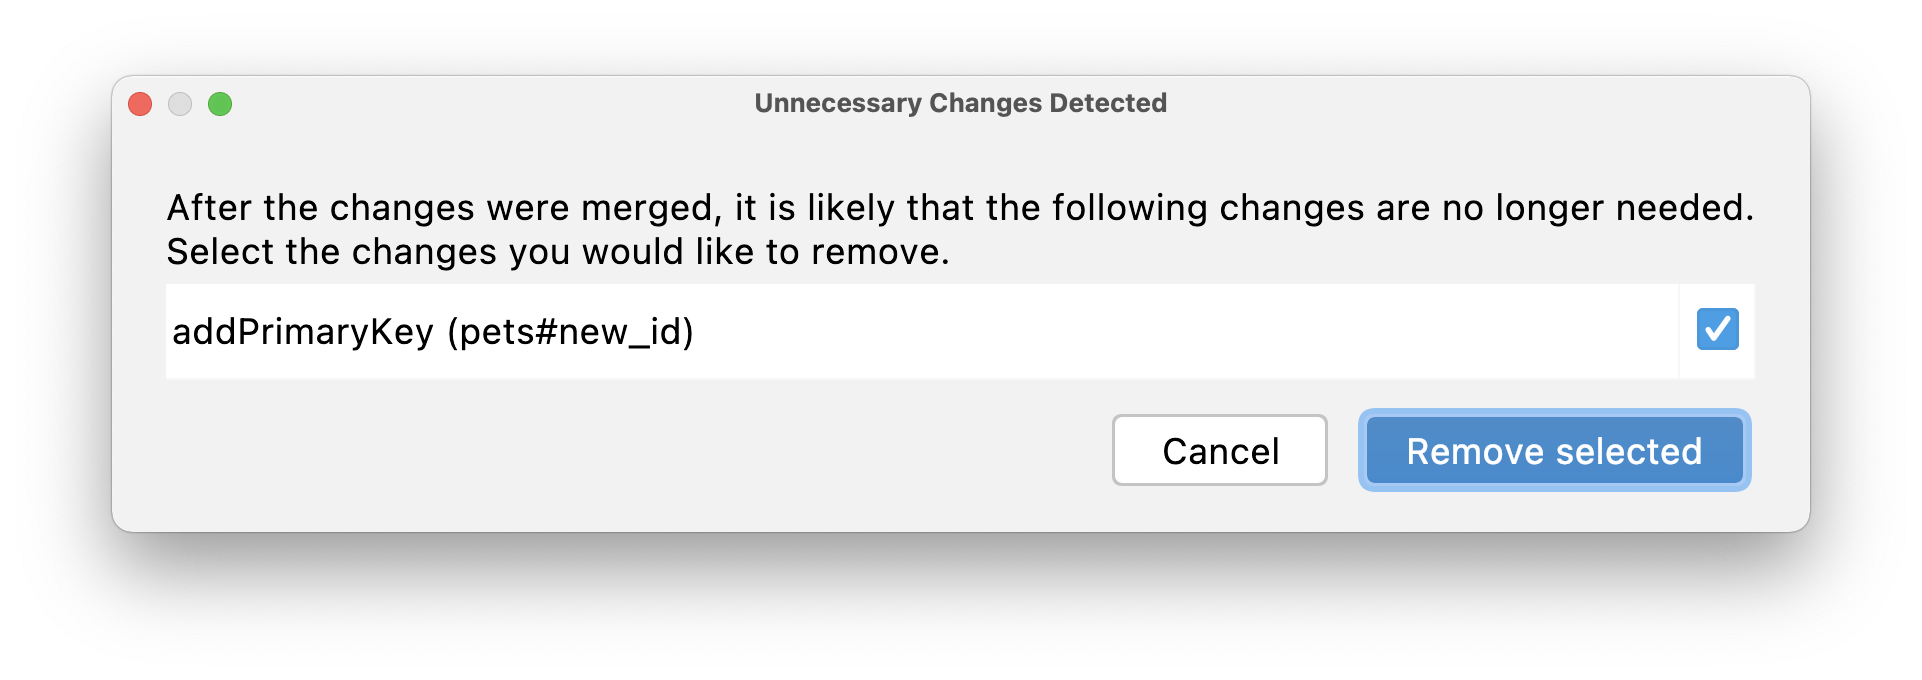 unnecessary-changes